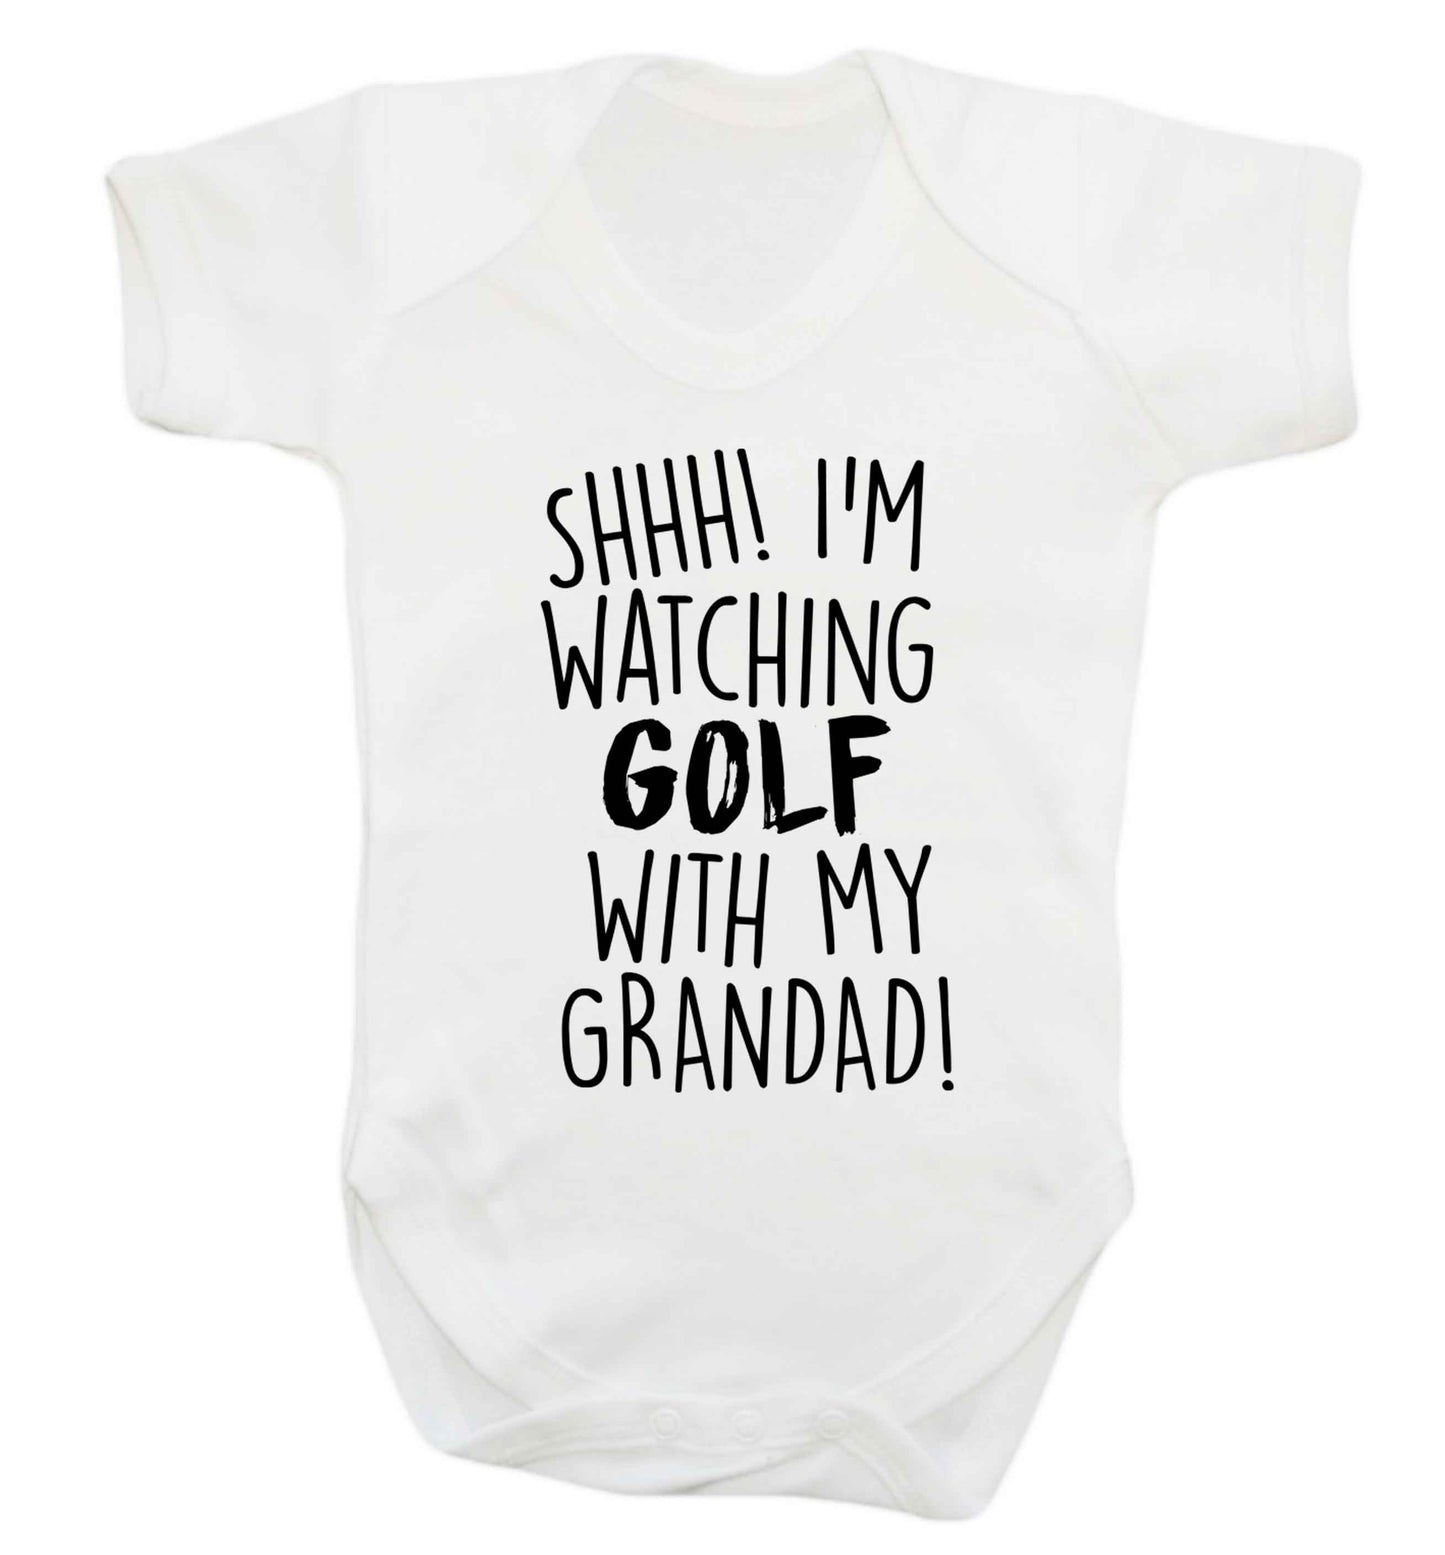 Shh I'm watching golf with my grandad Baby Vest white 18-24 months